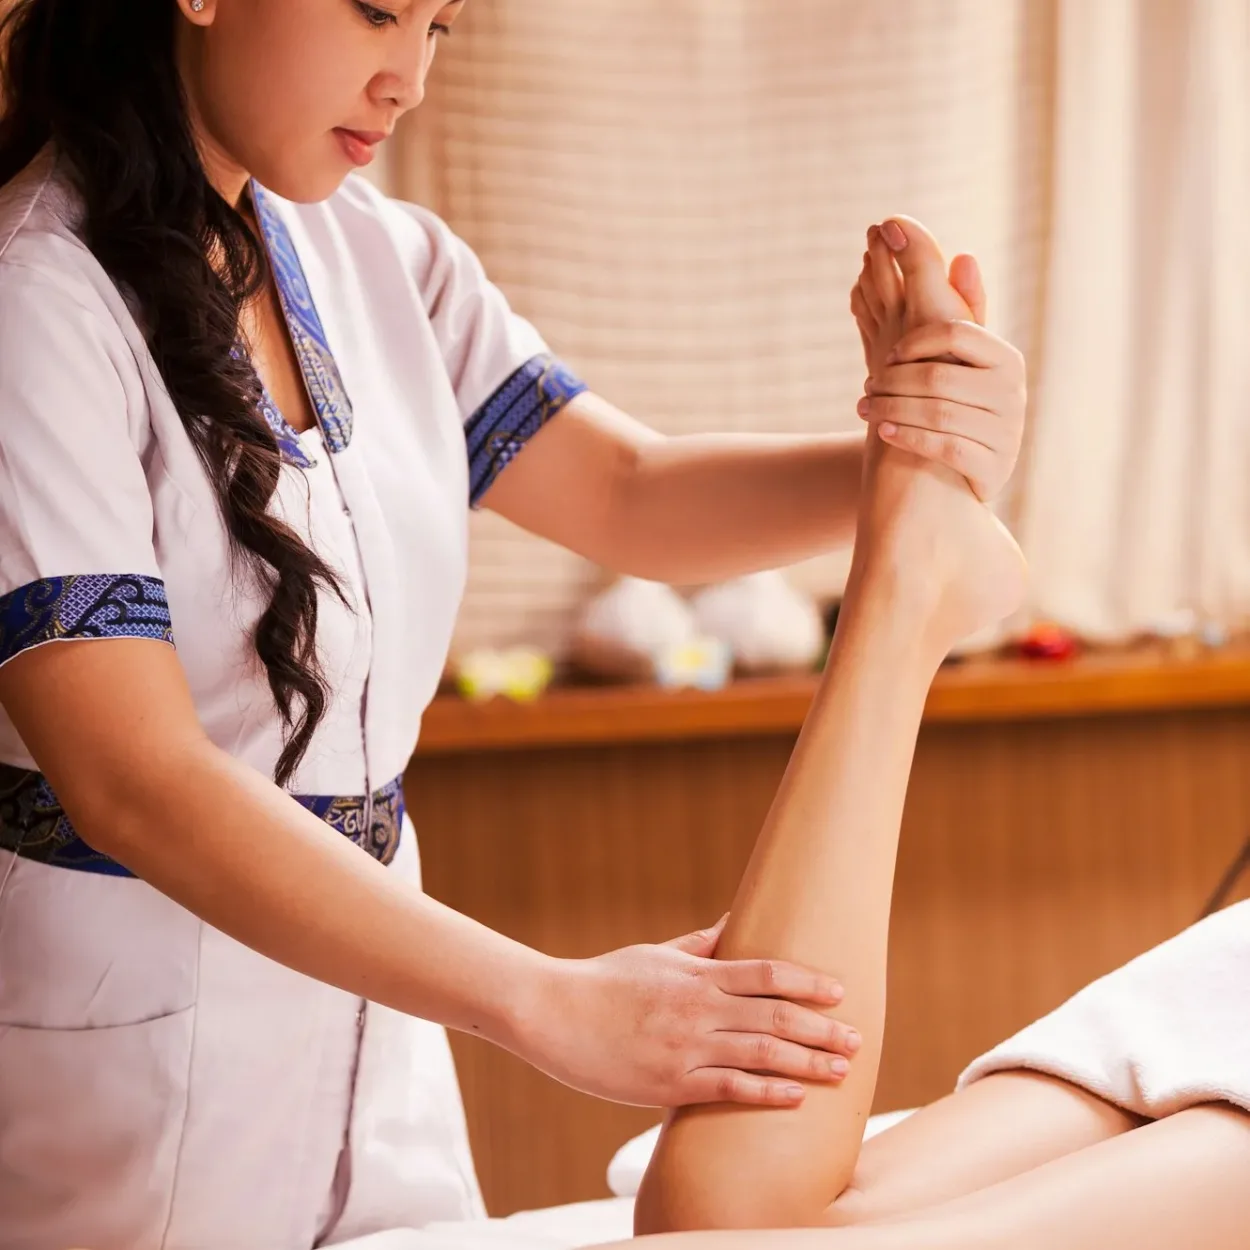 Legs massage. Confident Thai massage therapist massaging beautiful female leg